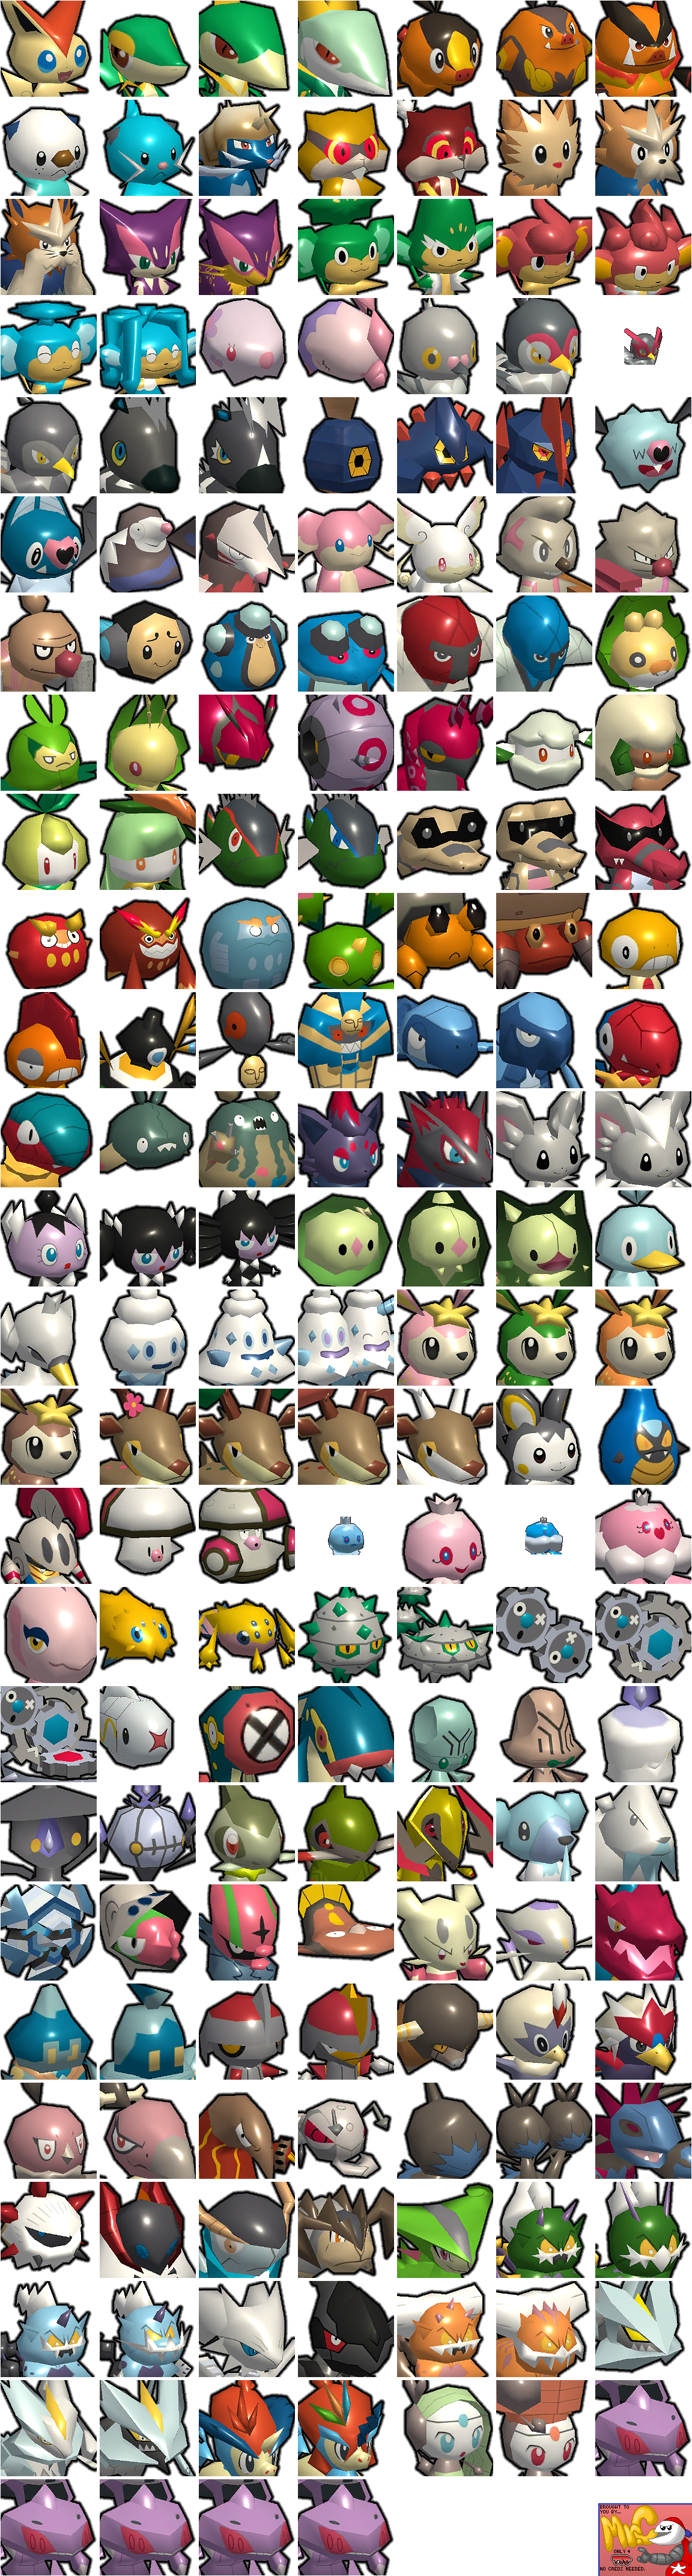 Pokémon Rumble Rush - Pokémon Icons (5th Generation)